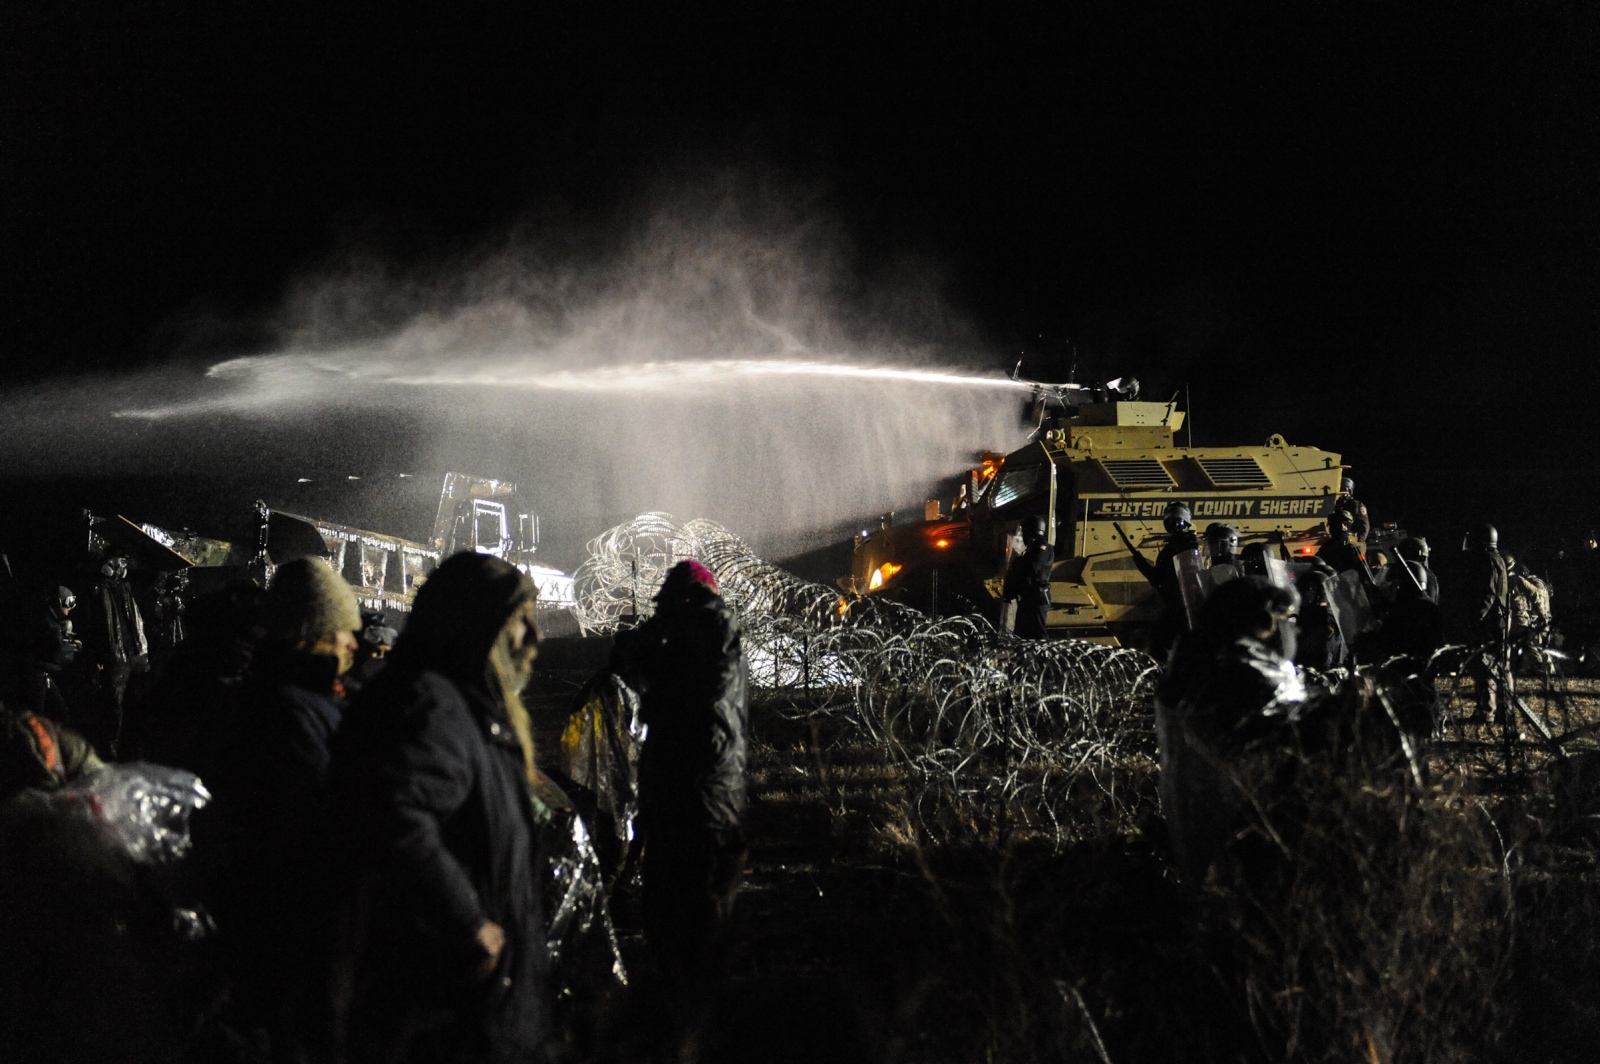 Killing the Black Snake: Resistance at Standing Rock - 